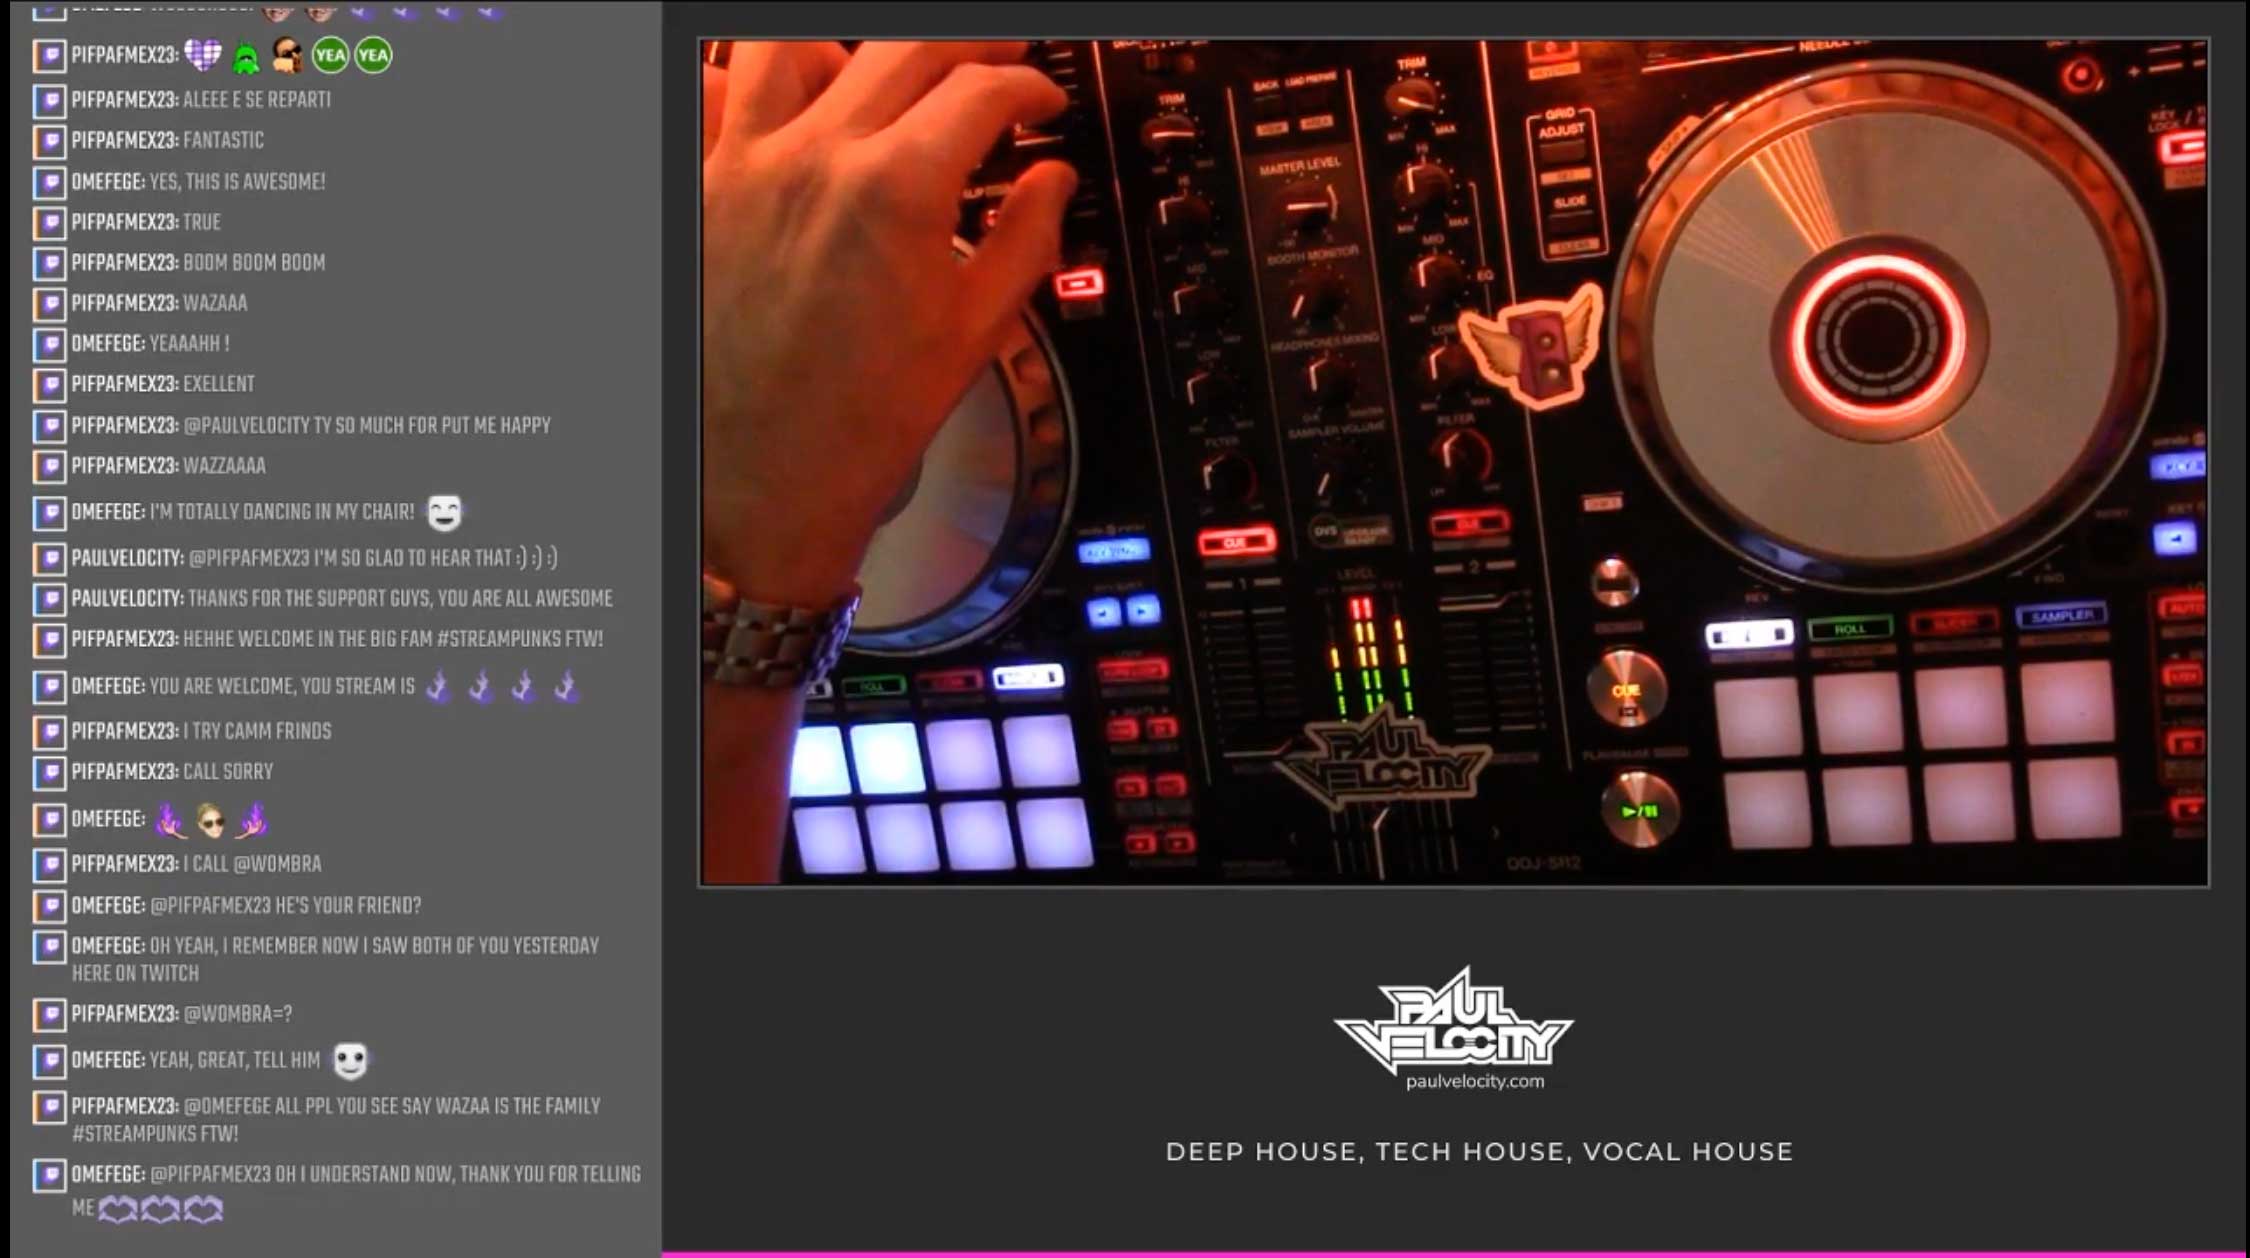 Screenshot of an episode of HouseBound showing a birds eye view of DJ mixing equipment